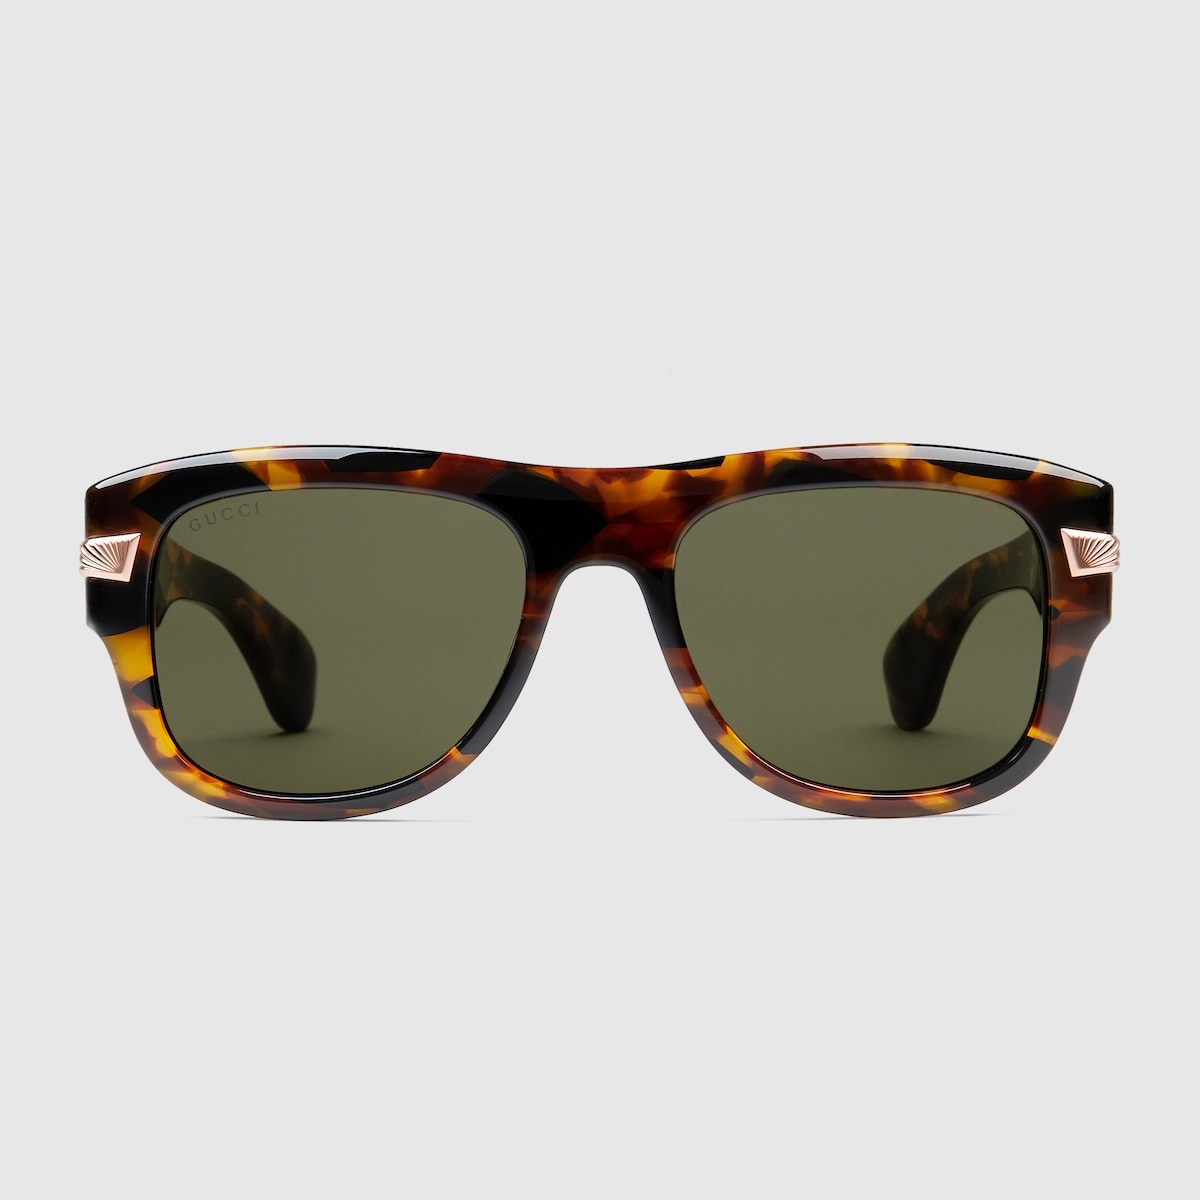 Squared frame sunglasses - 1